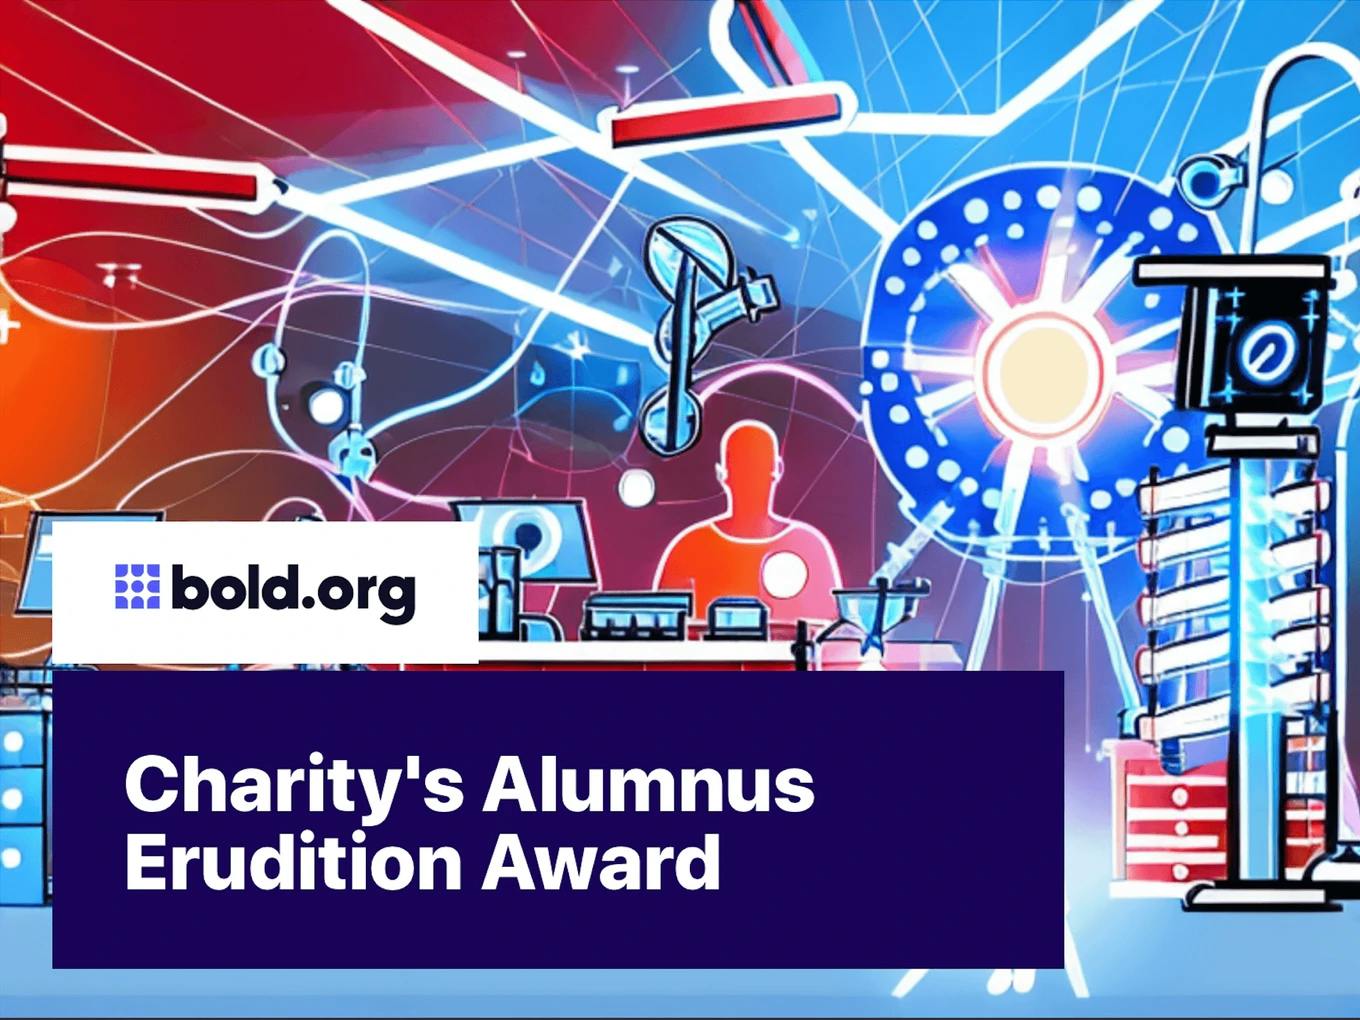 Charity's Alumnus Erudition Award